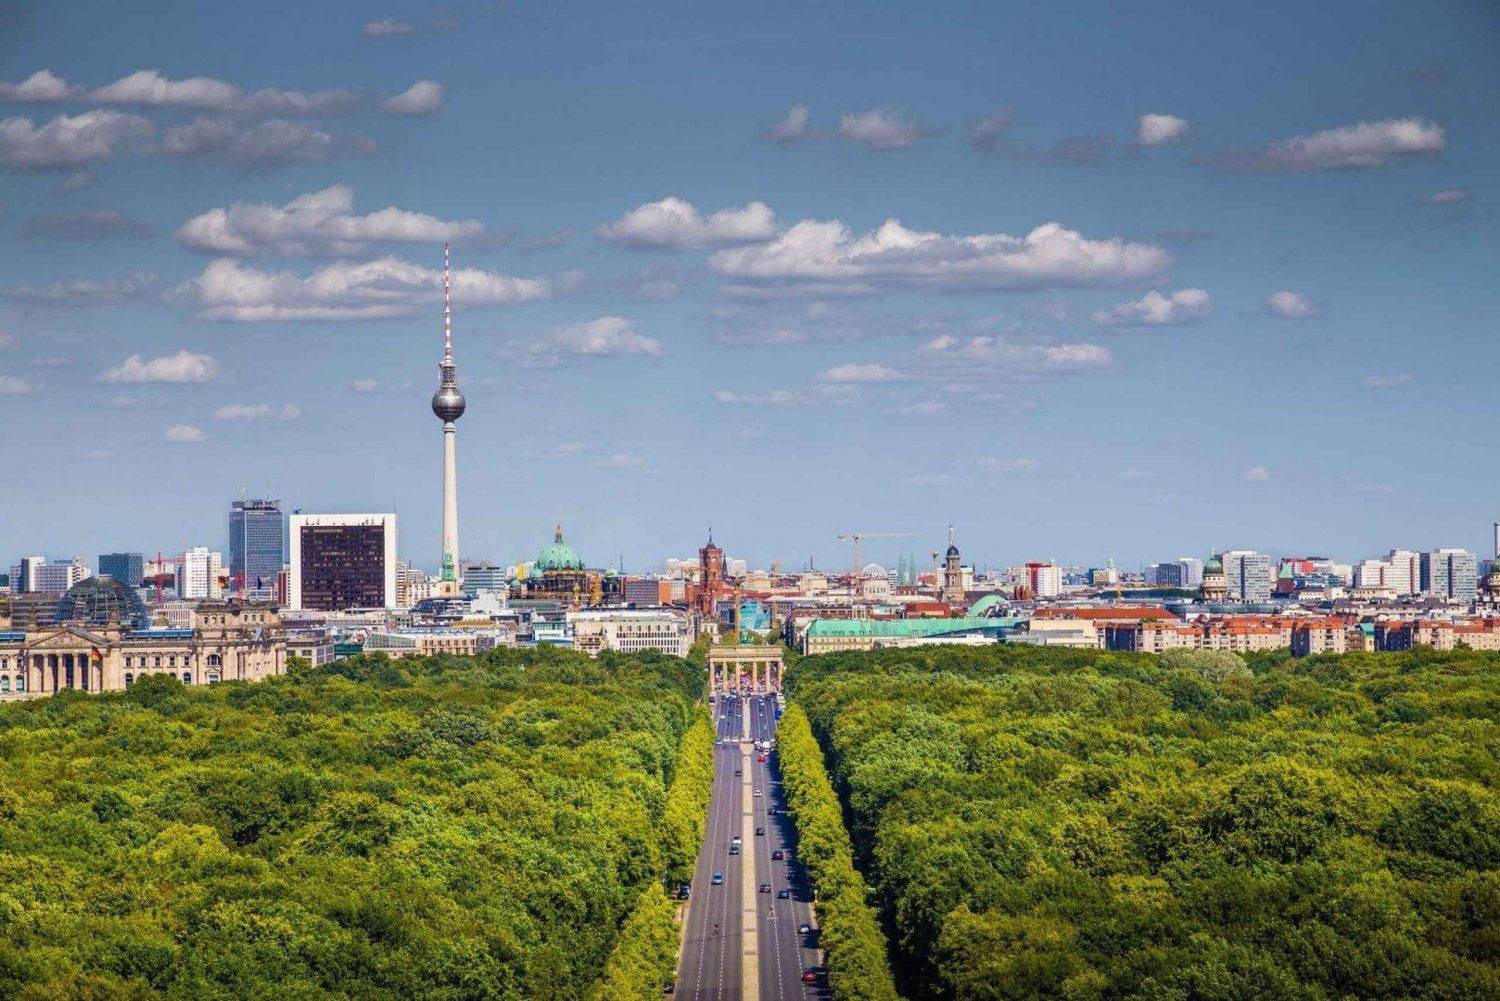 Tiergarten Park Audio Tour: Discover the Heart of Berlin